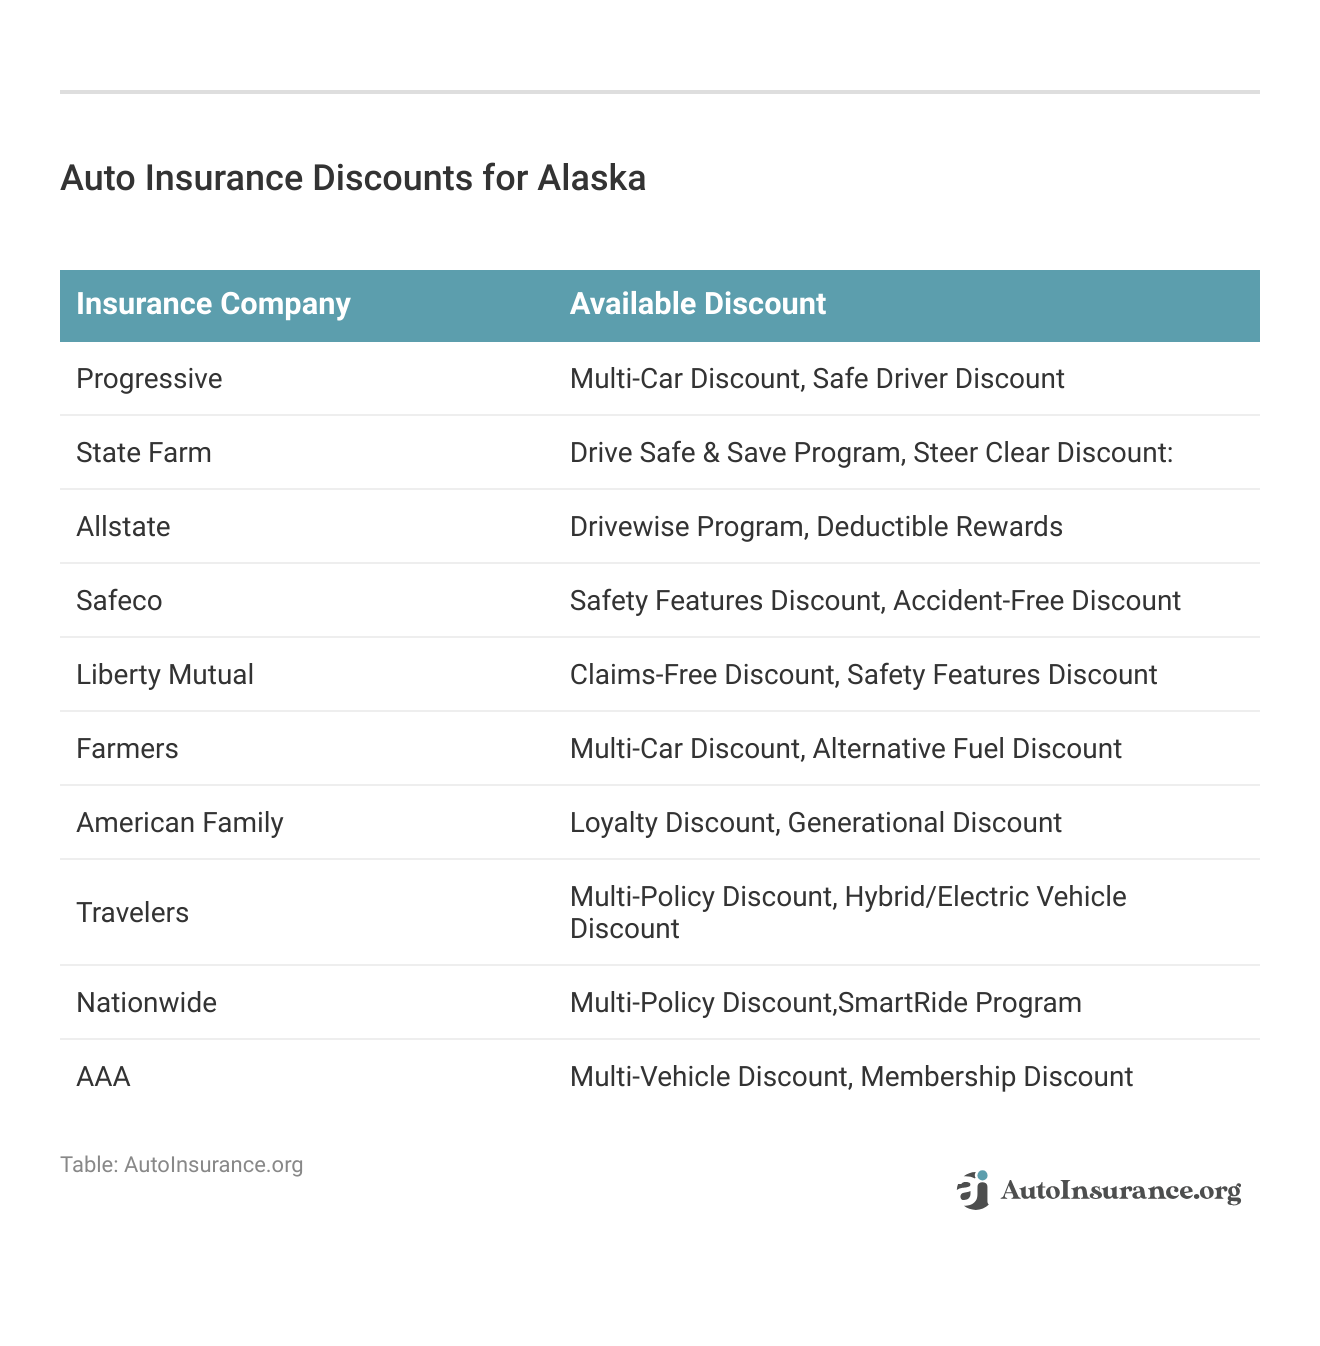 <h3>Auto Insurance Discounts for Alaska</h3>